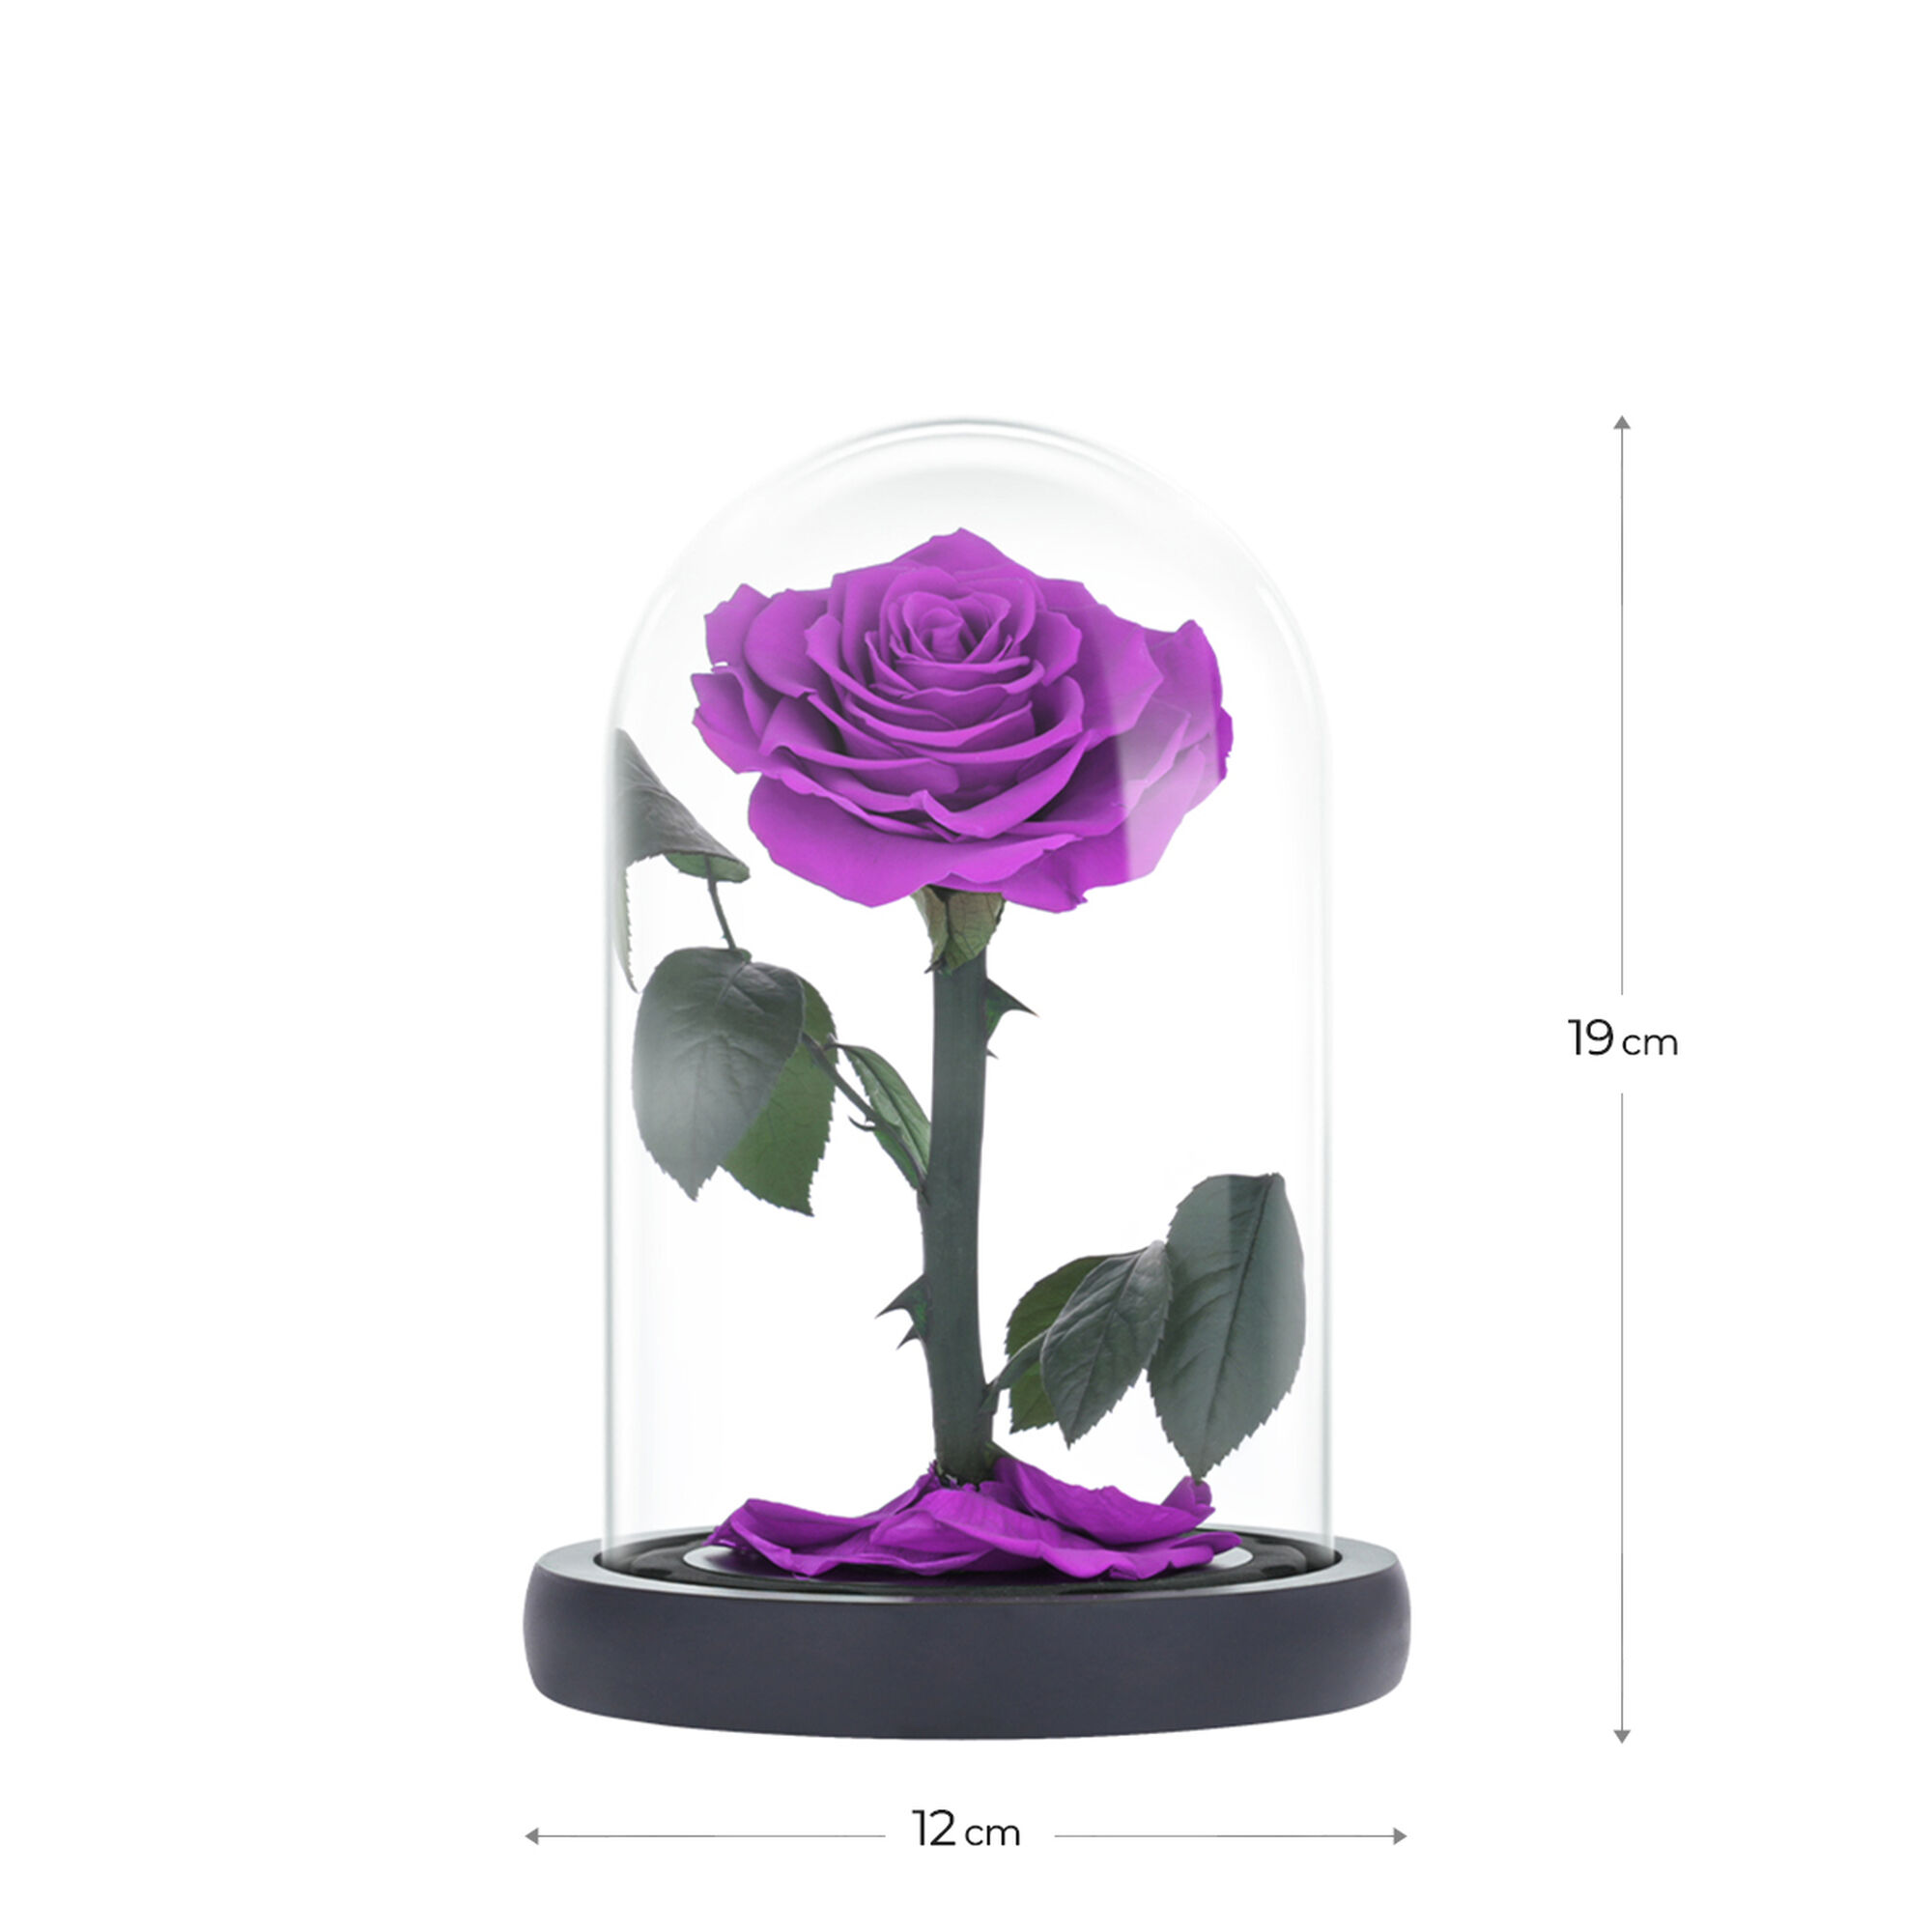 Small purple everlasting natural rose